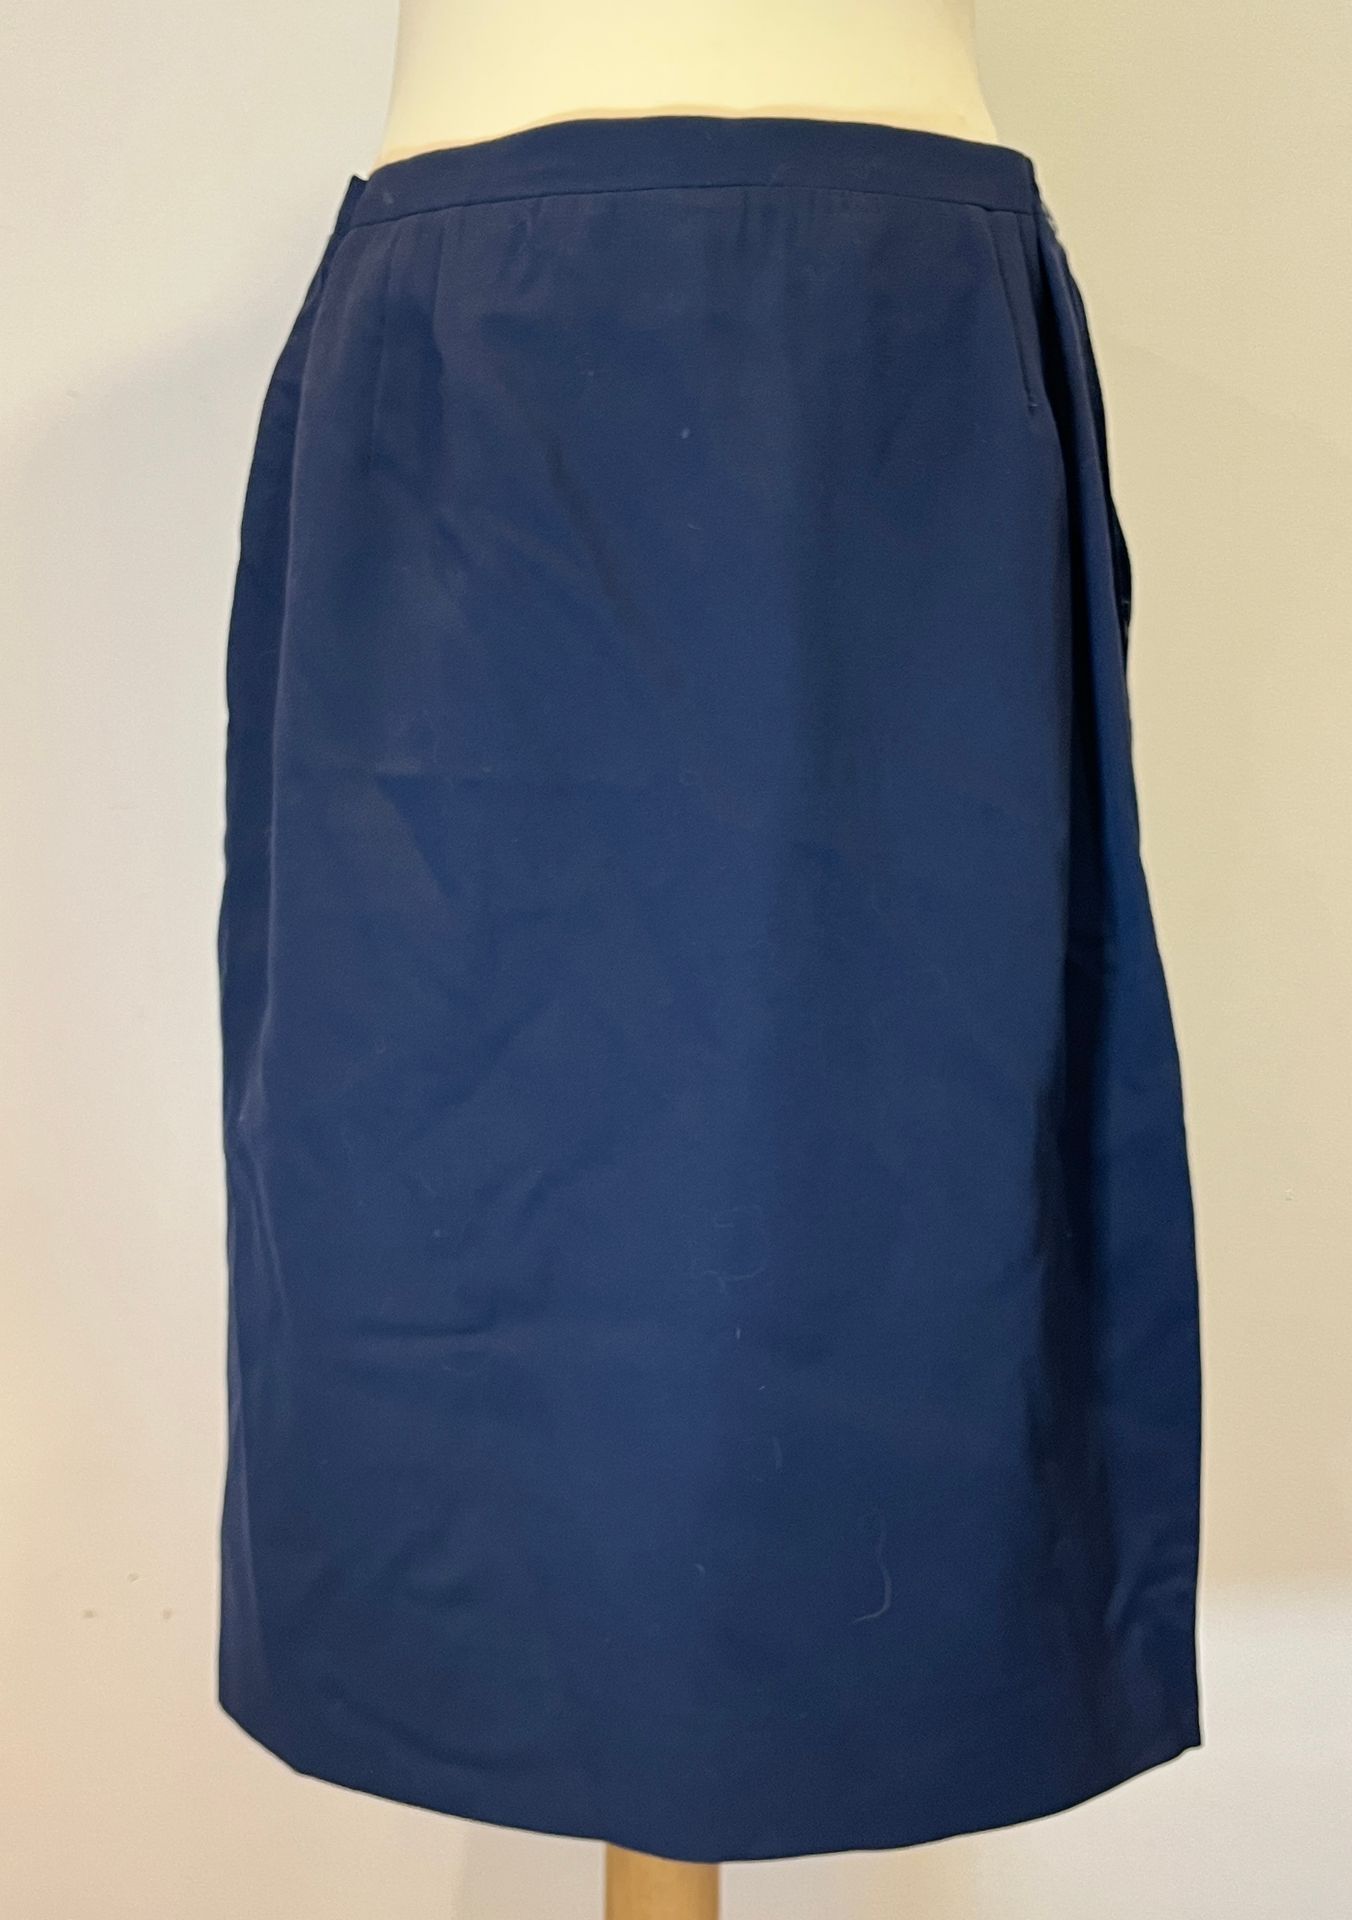 Null VALENTINO NIGHT - 一条午夜蓝色的绉绸裙子，前面有两个贴袋。

Valentino BOUTIQUE - 一条海军蓝粉粒直筒裙。尺寸4&hellip;